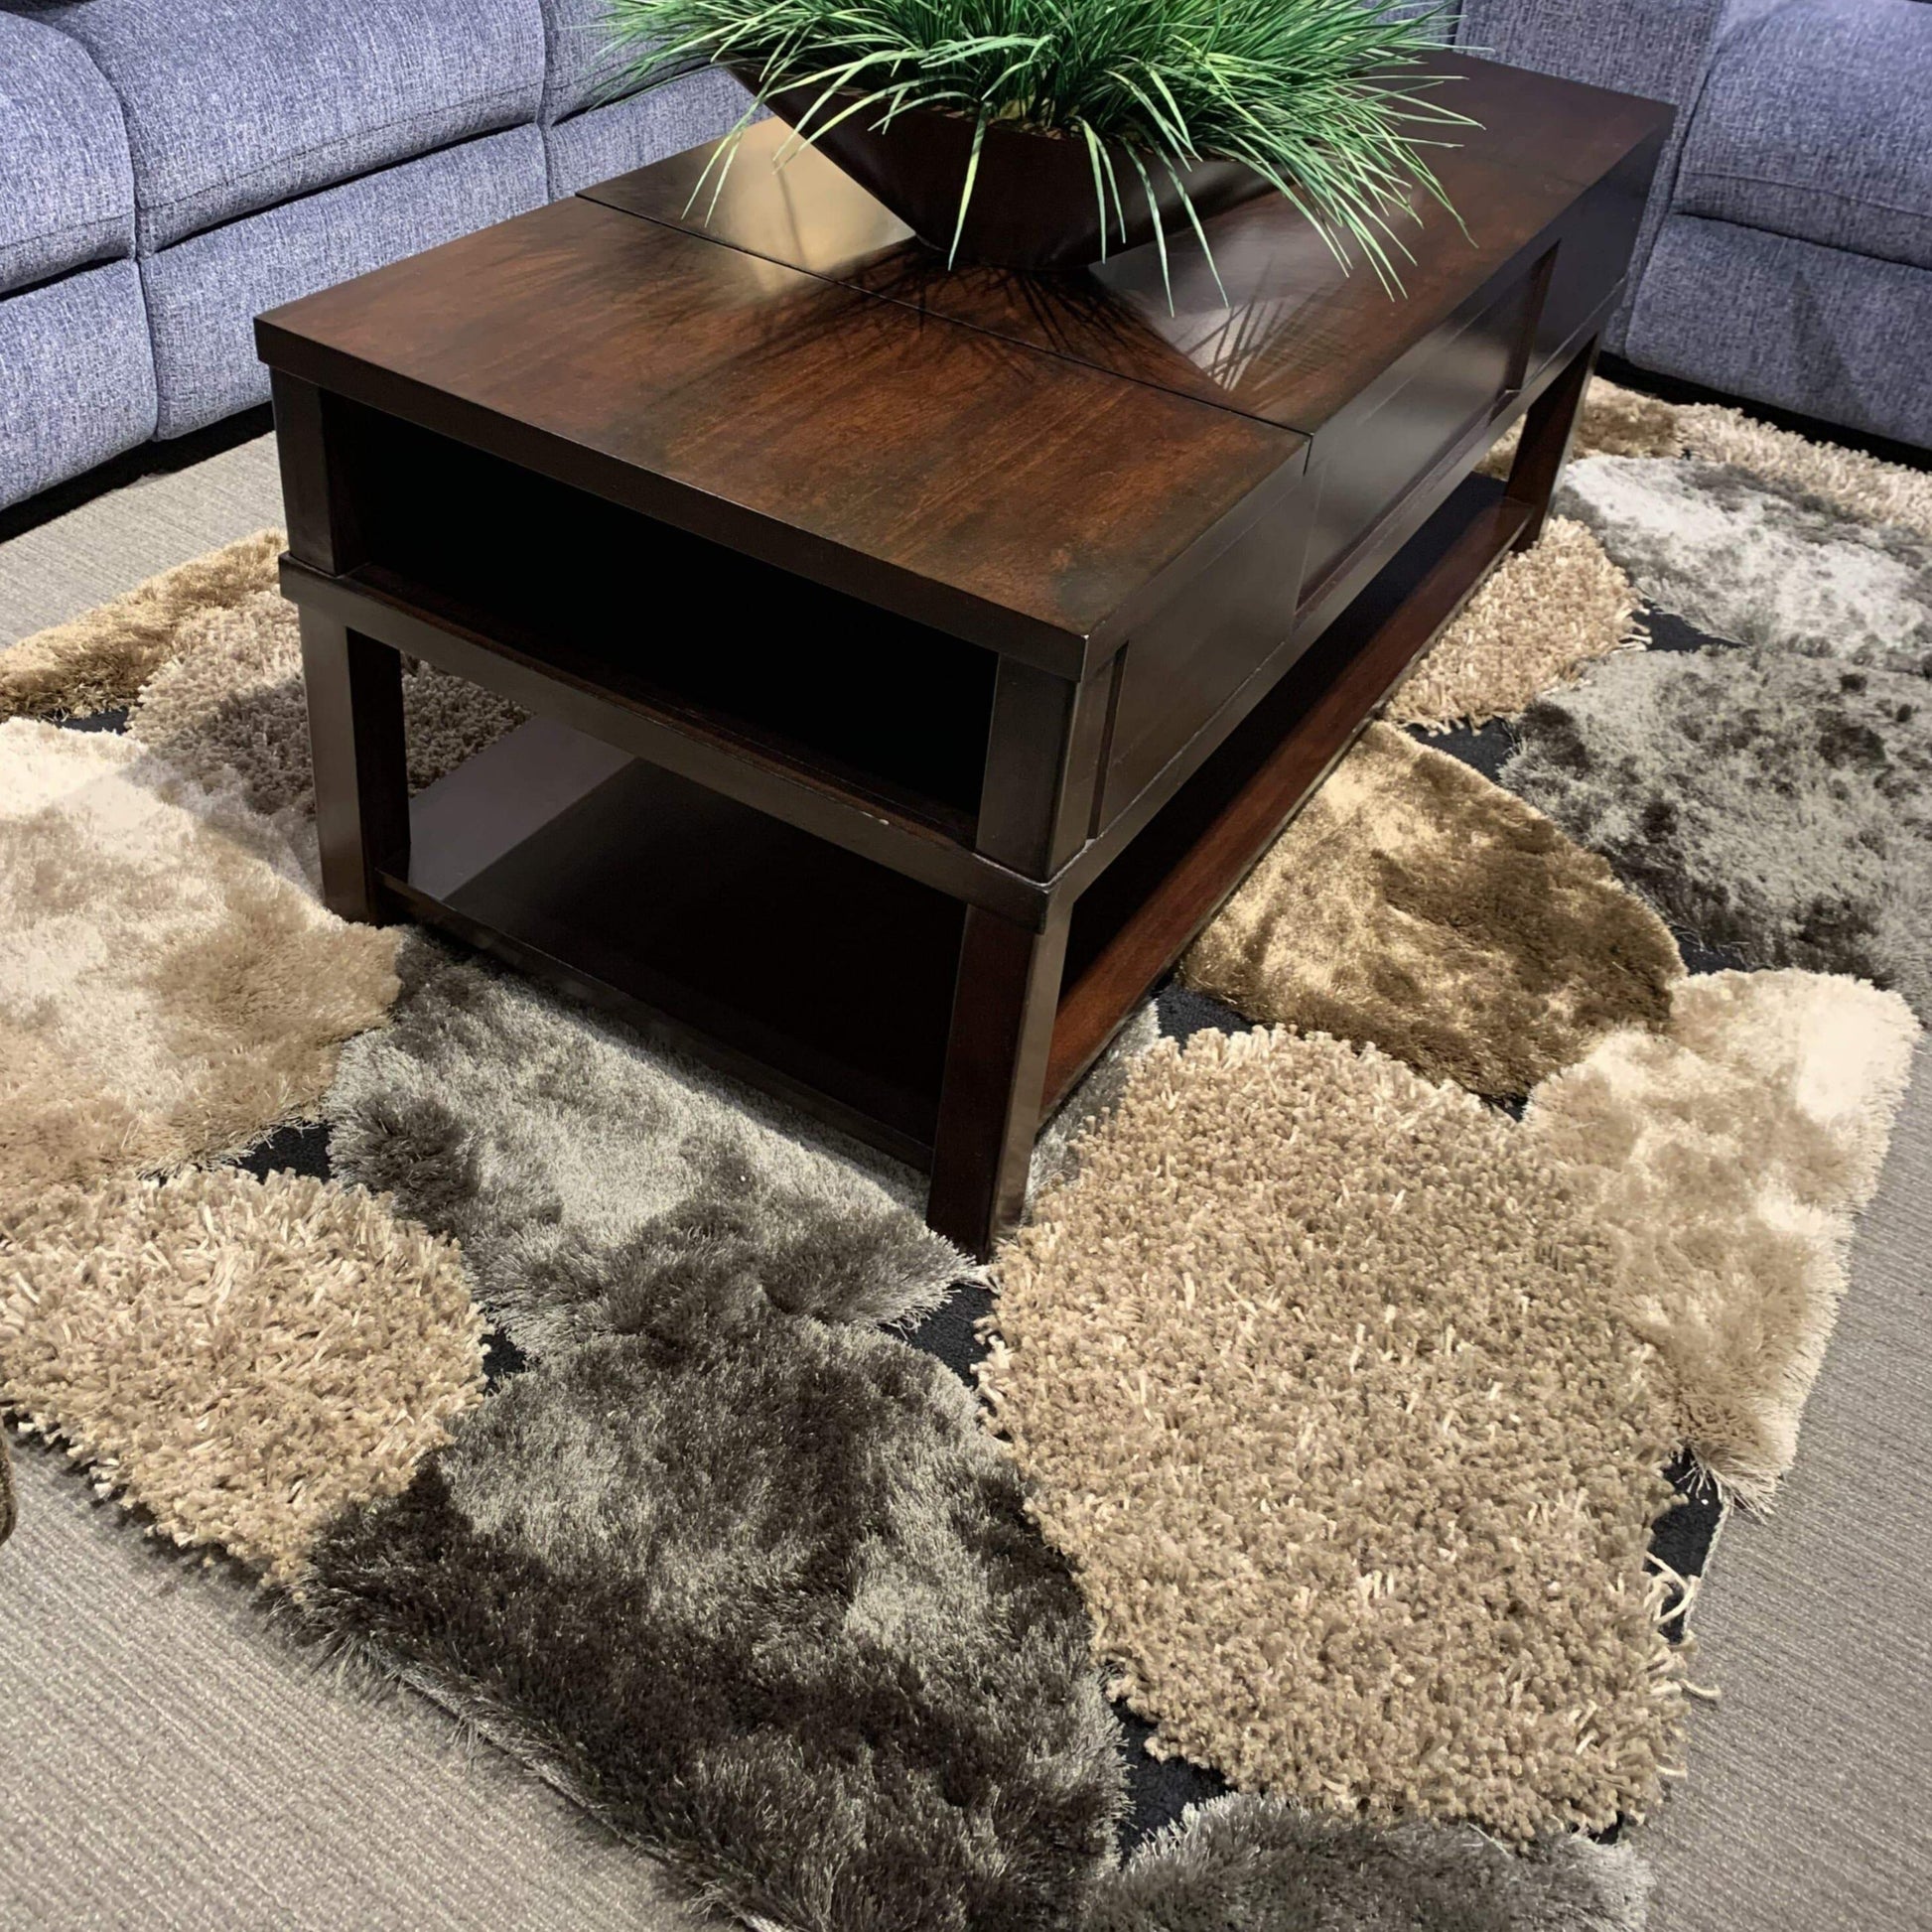 Stone Soft Plush Design Shag Area Rug/Carpet